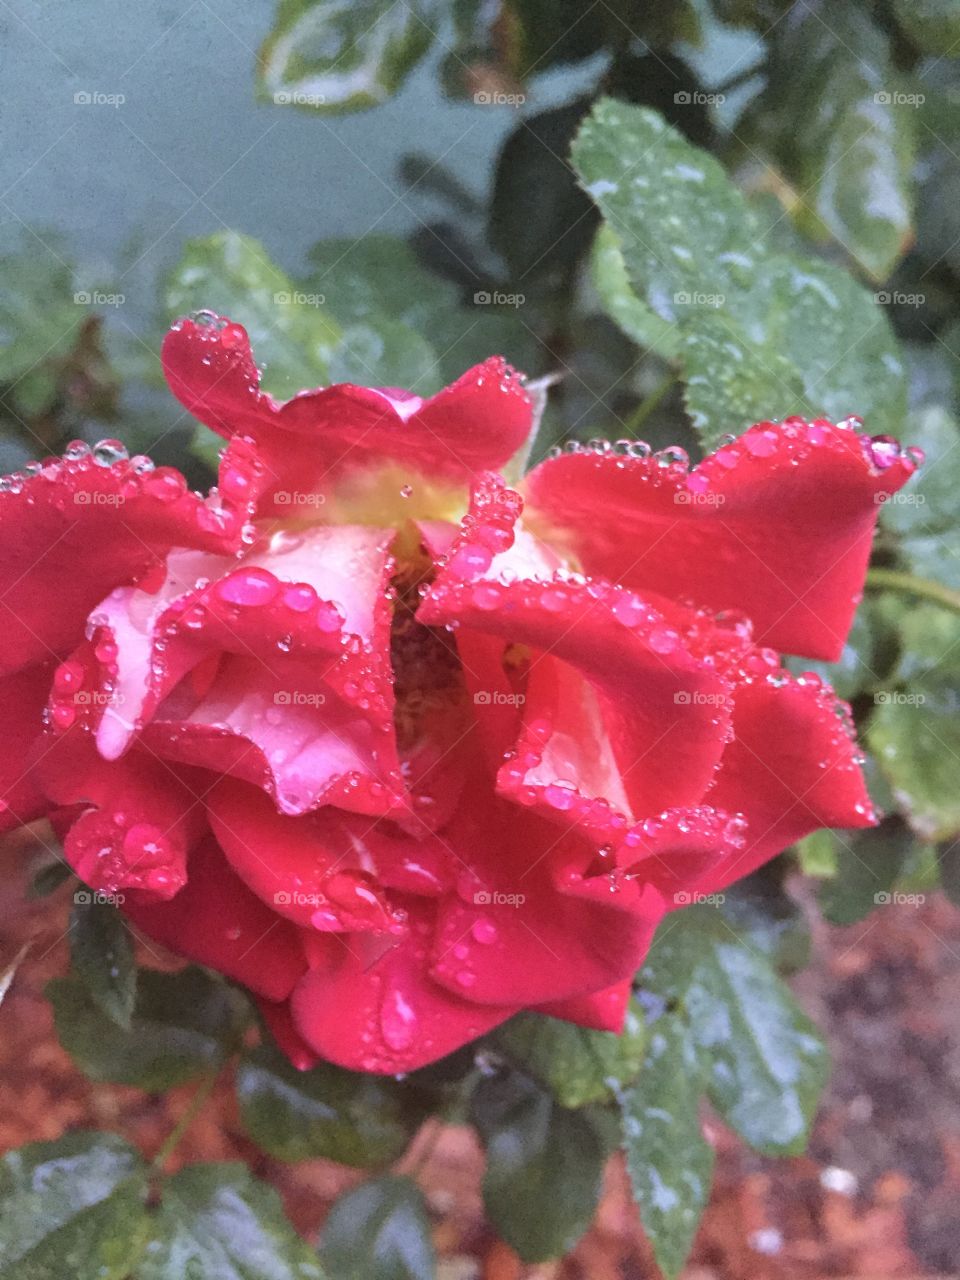 Rain drops on roses!